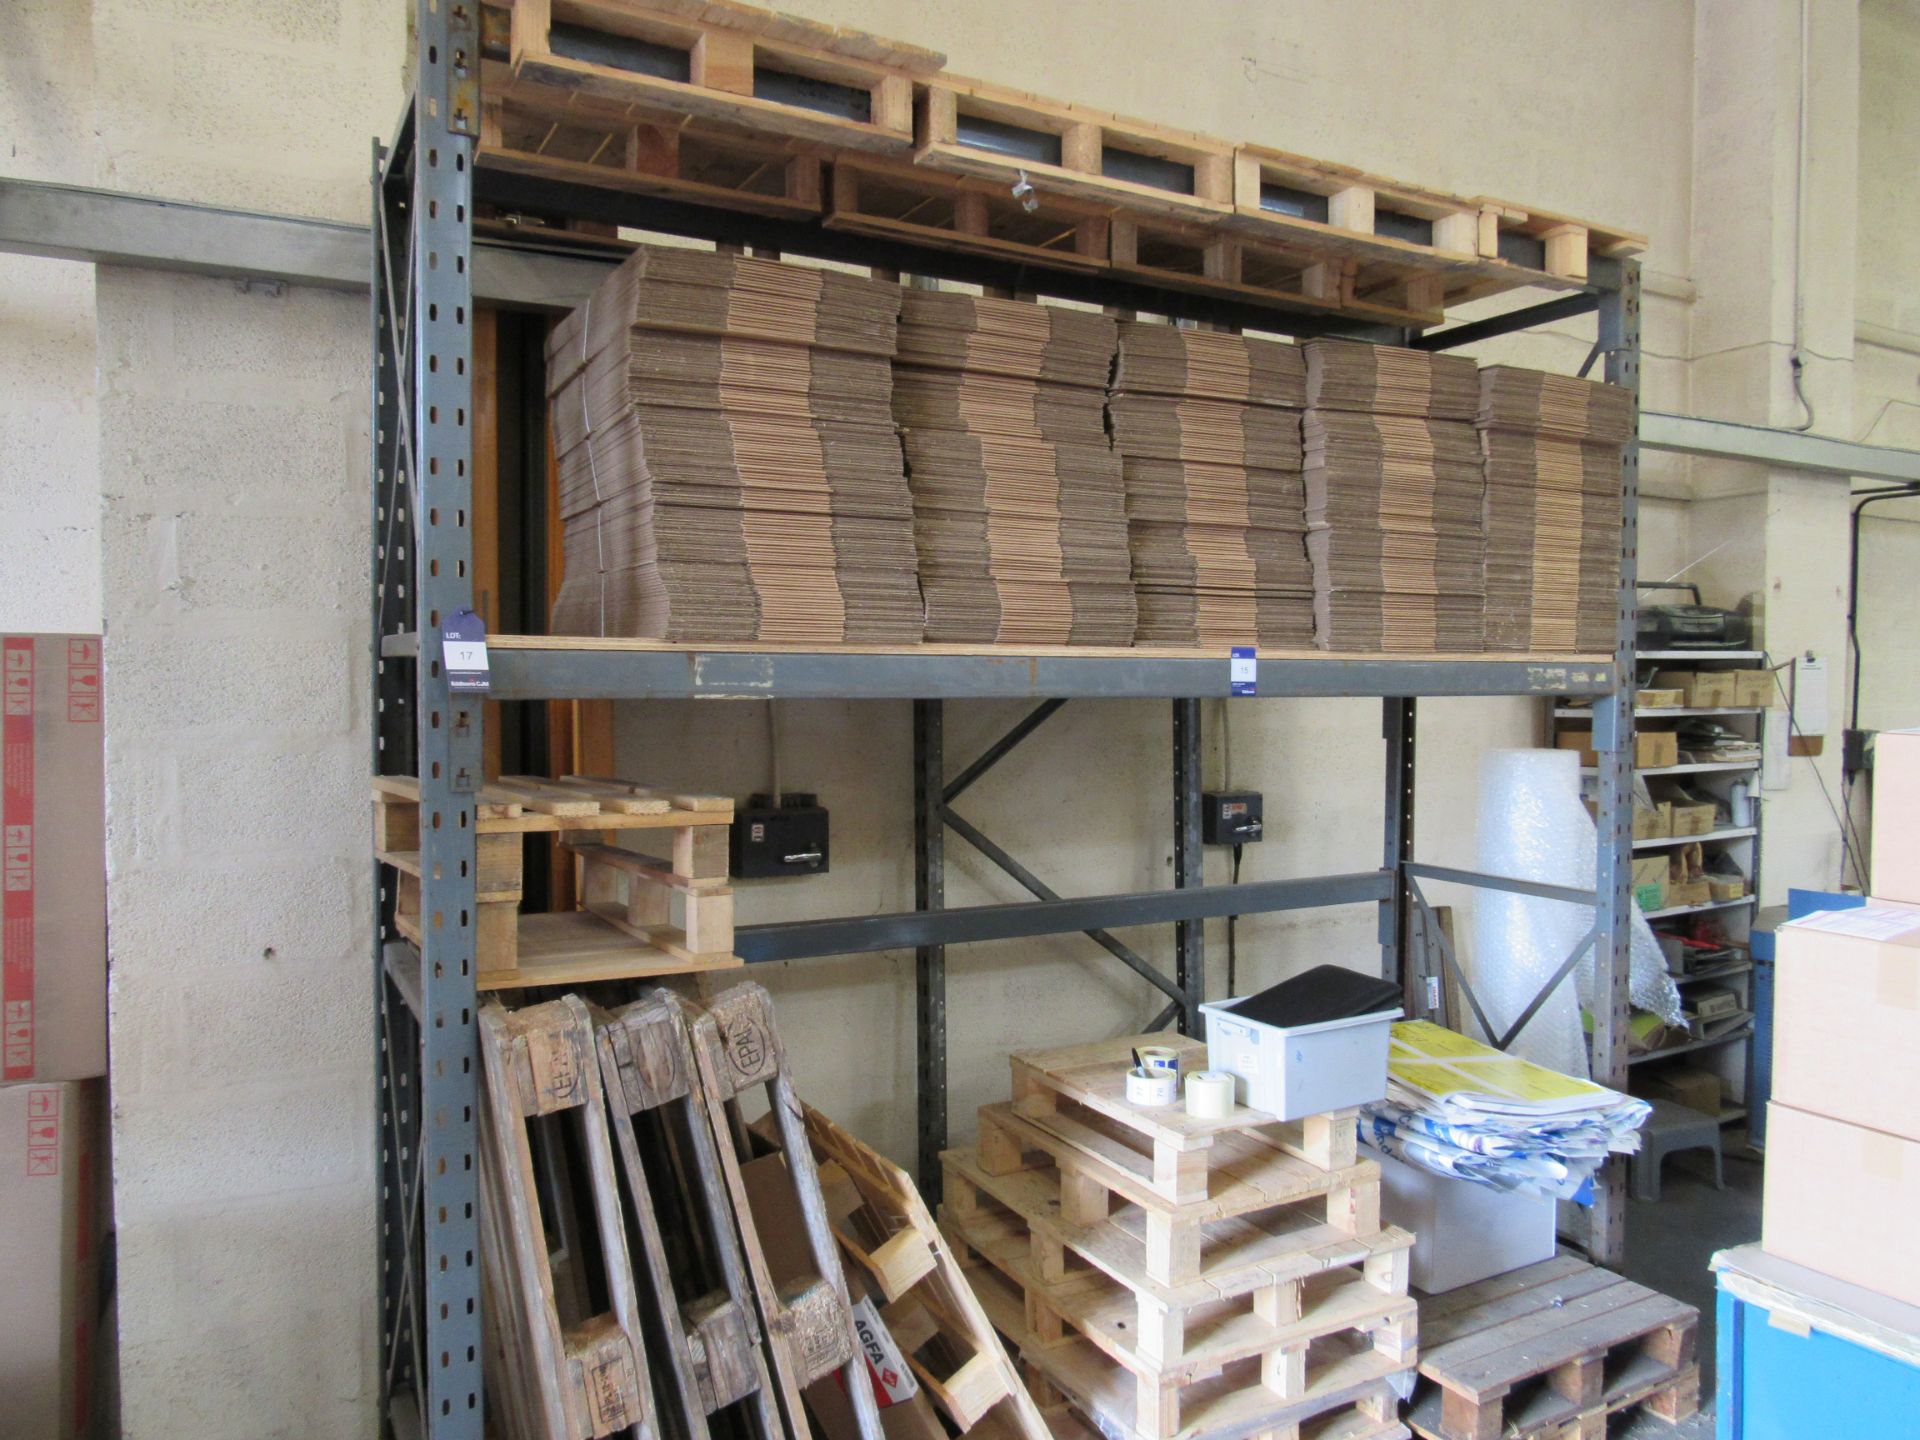 2 Tier Warehouse Rack - Image 2 of 2